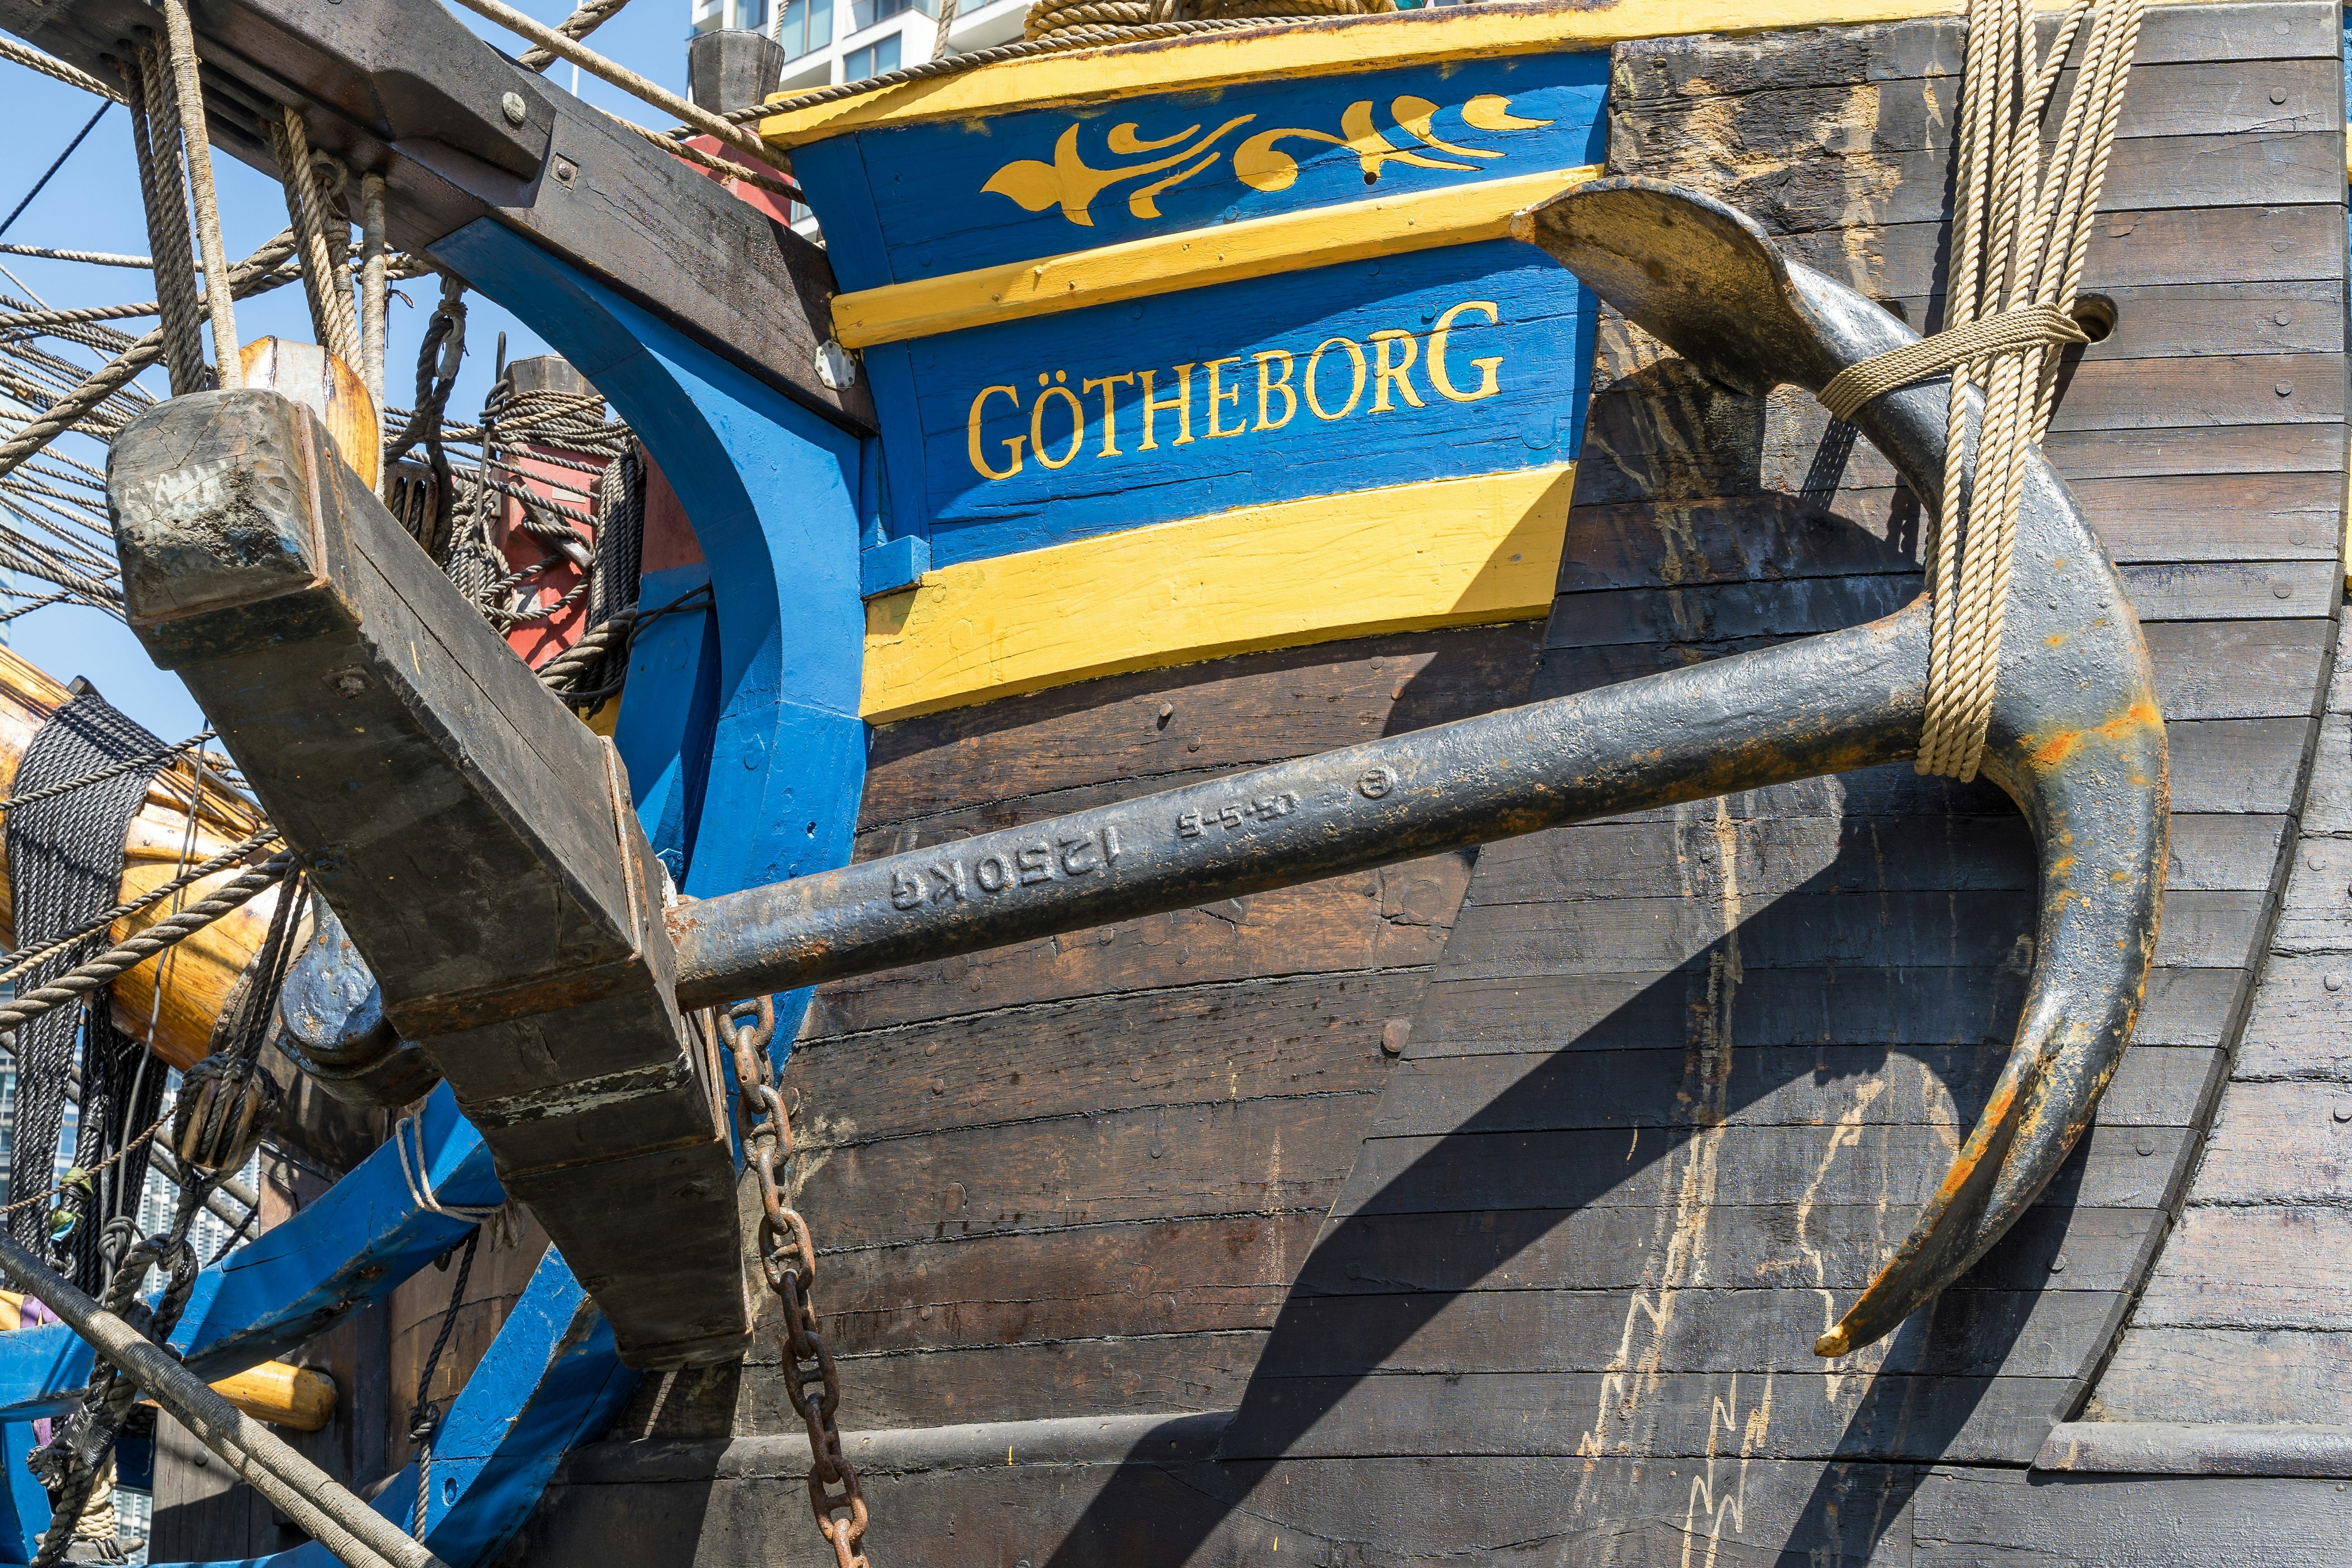 Swedish sailing ship Götheborg, a replica of the Swedish East Indiaman Götheborg. Source.